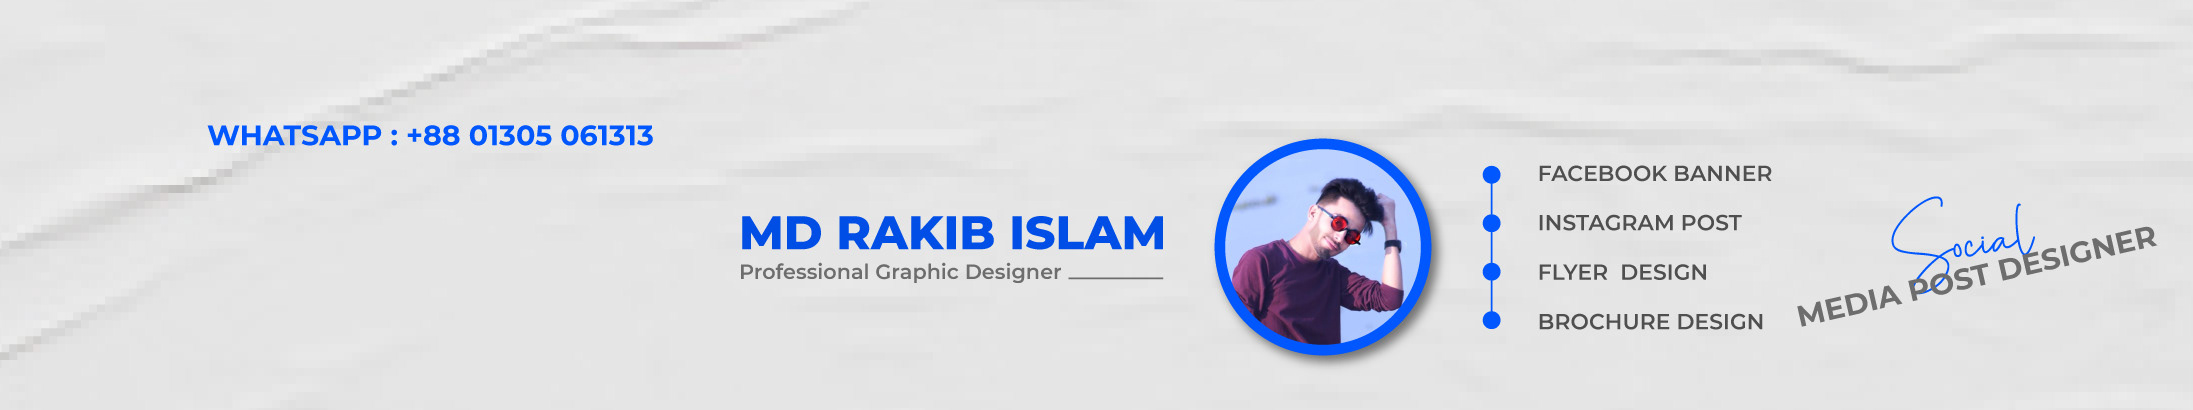 Md Rakib Islam's profile banner